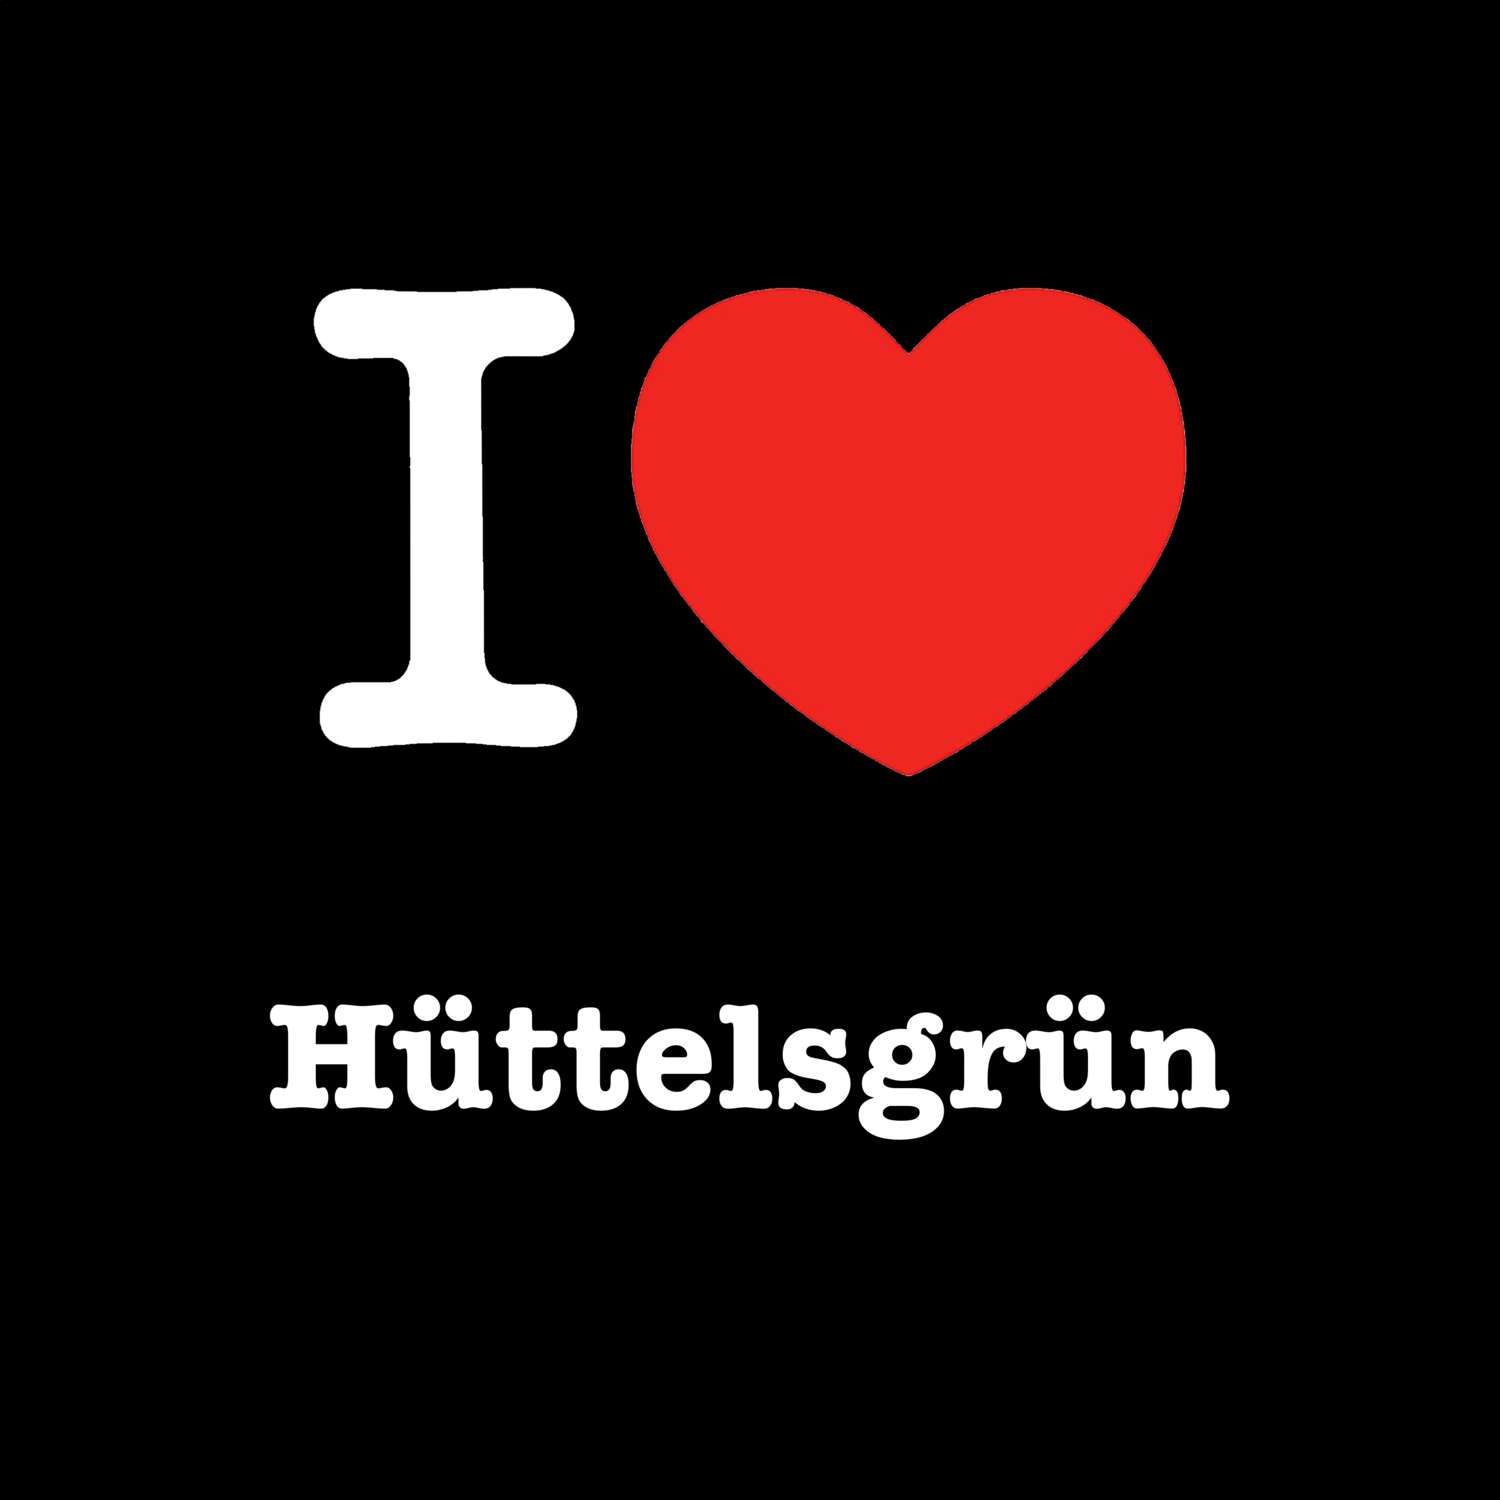 Hüttelsgrün T-Shirt »I love«